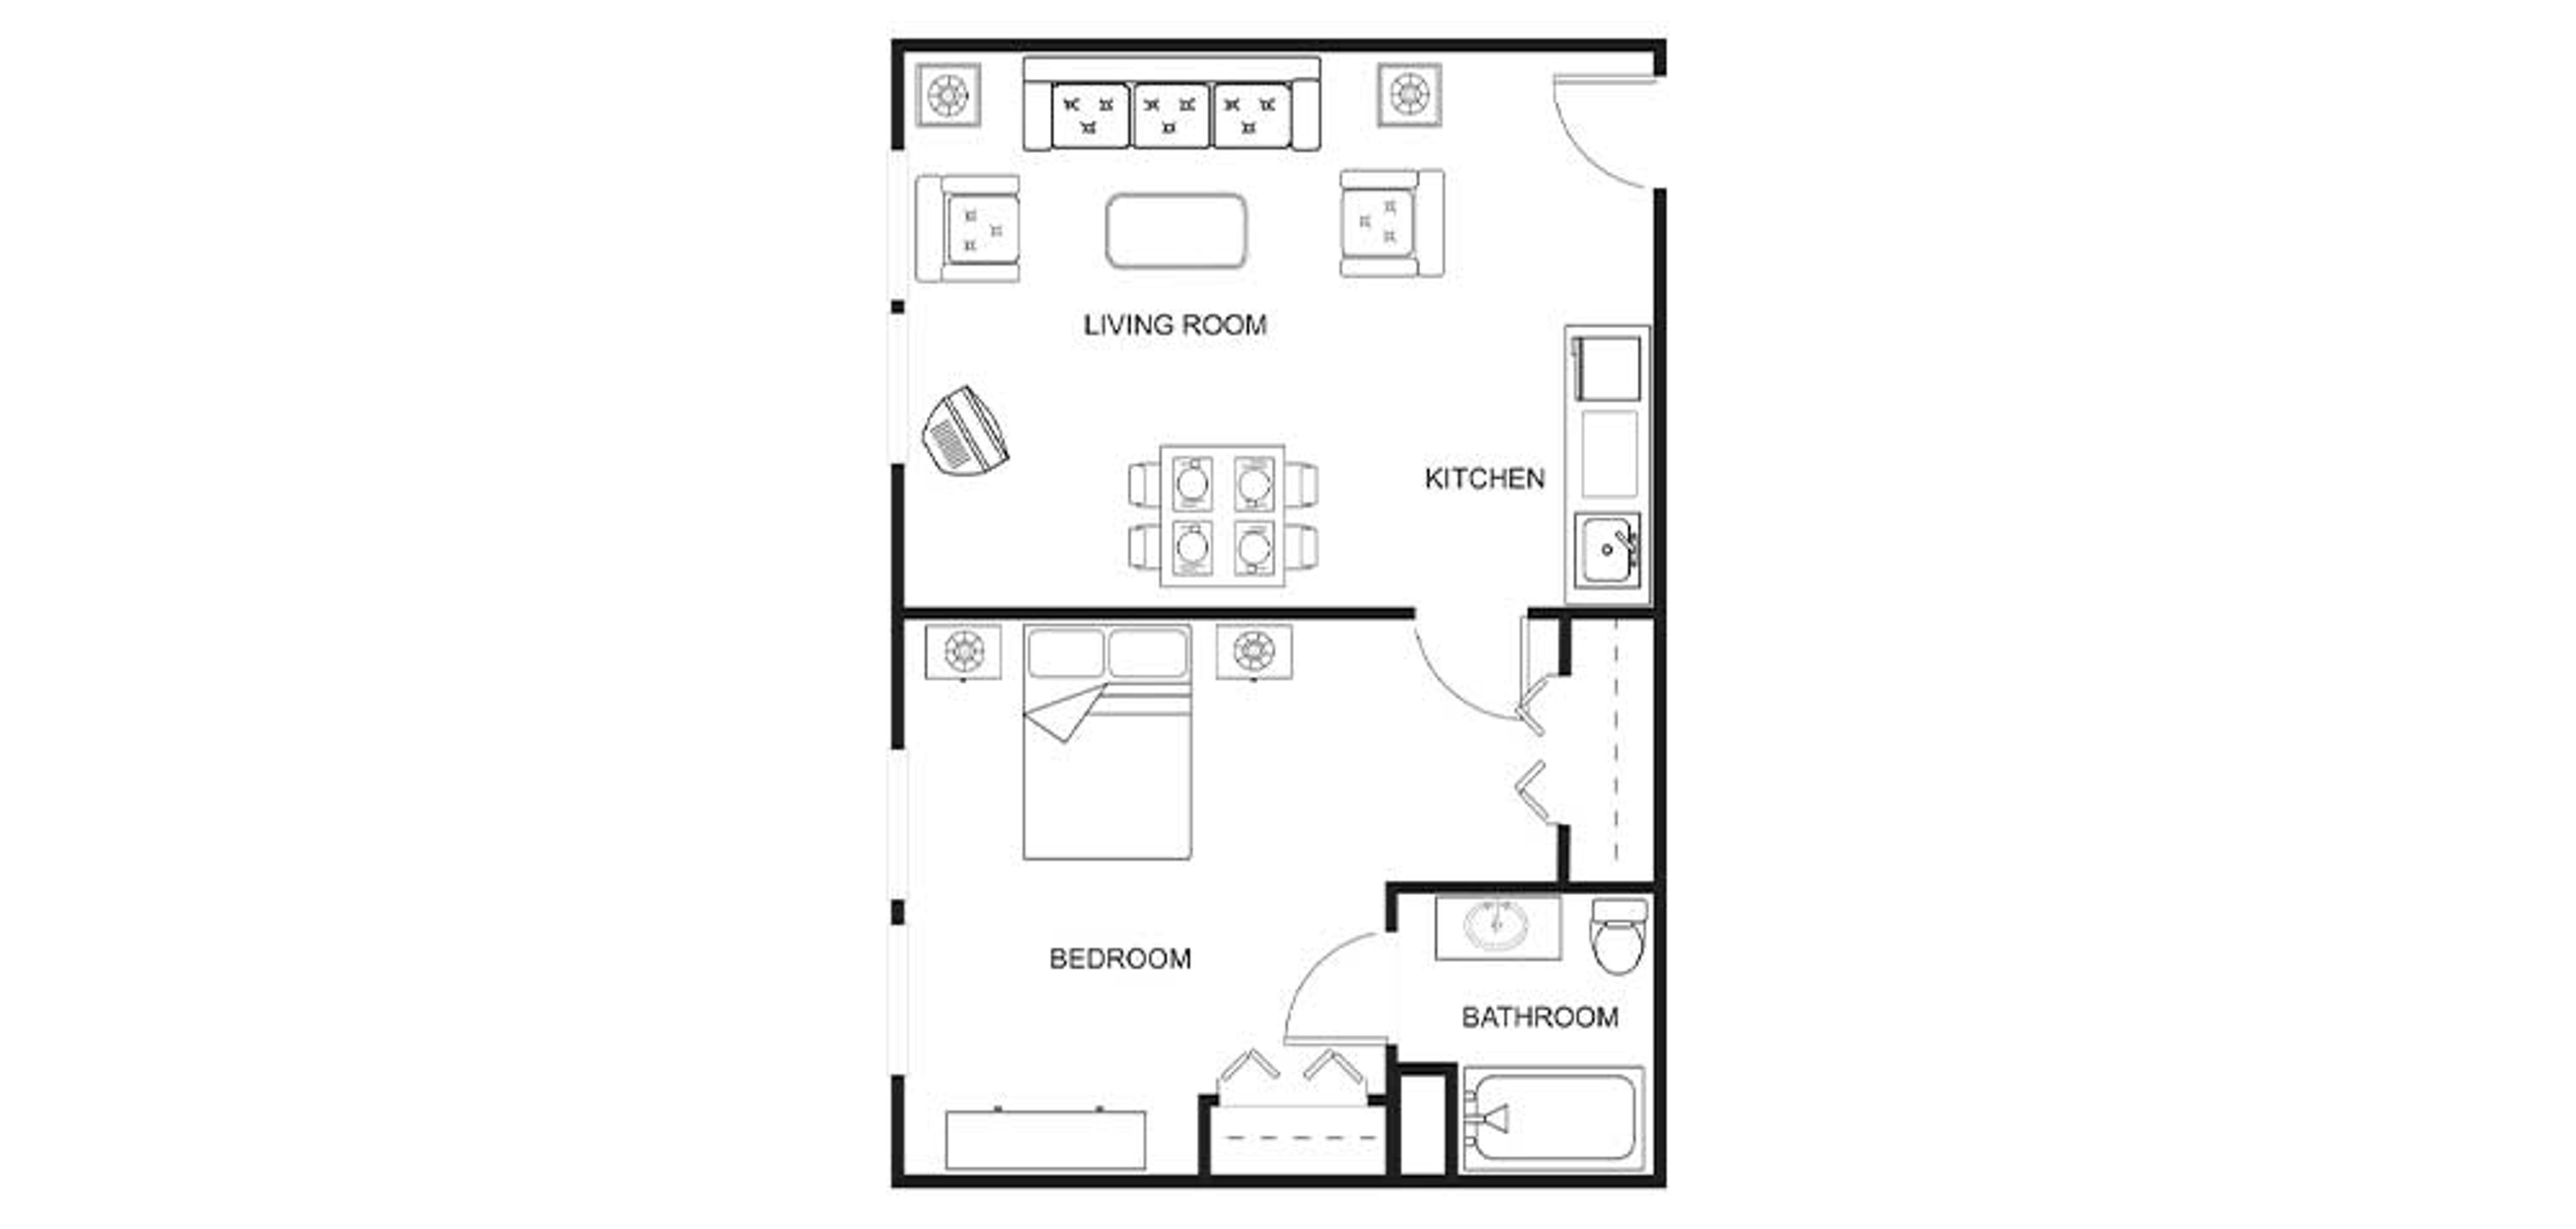 Floorplan - Pheasant Pointe B1 - 1 bed, 1 bath, 570 sq. ft. Assisted Living